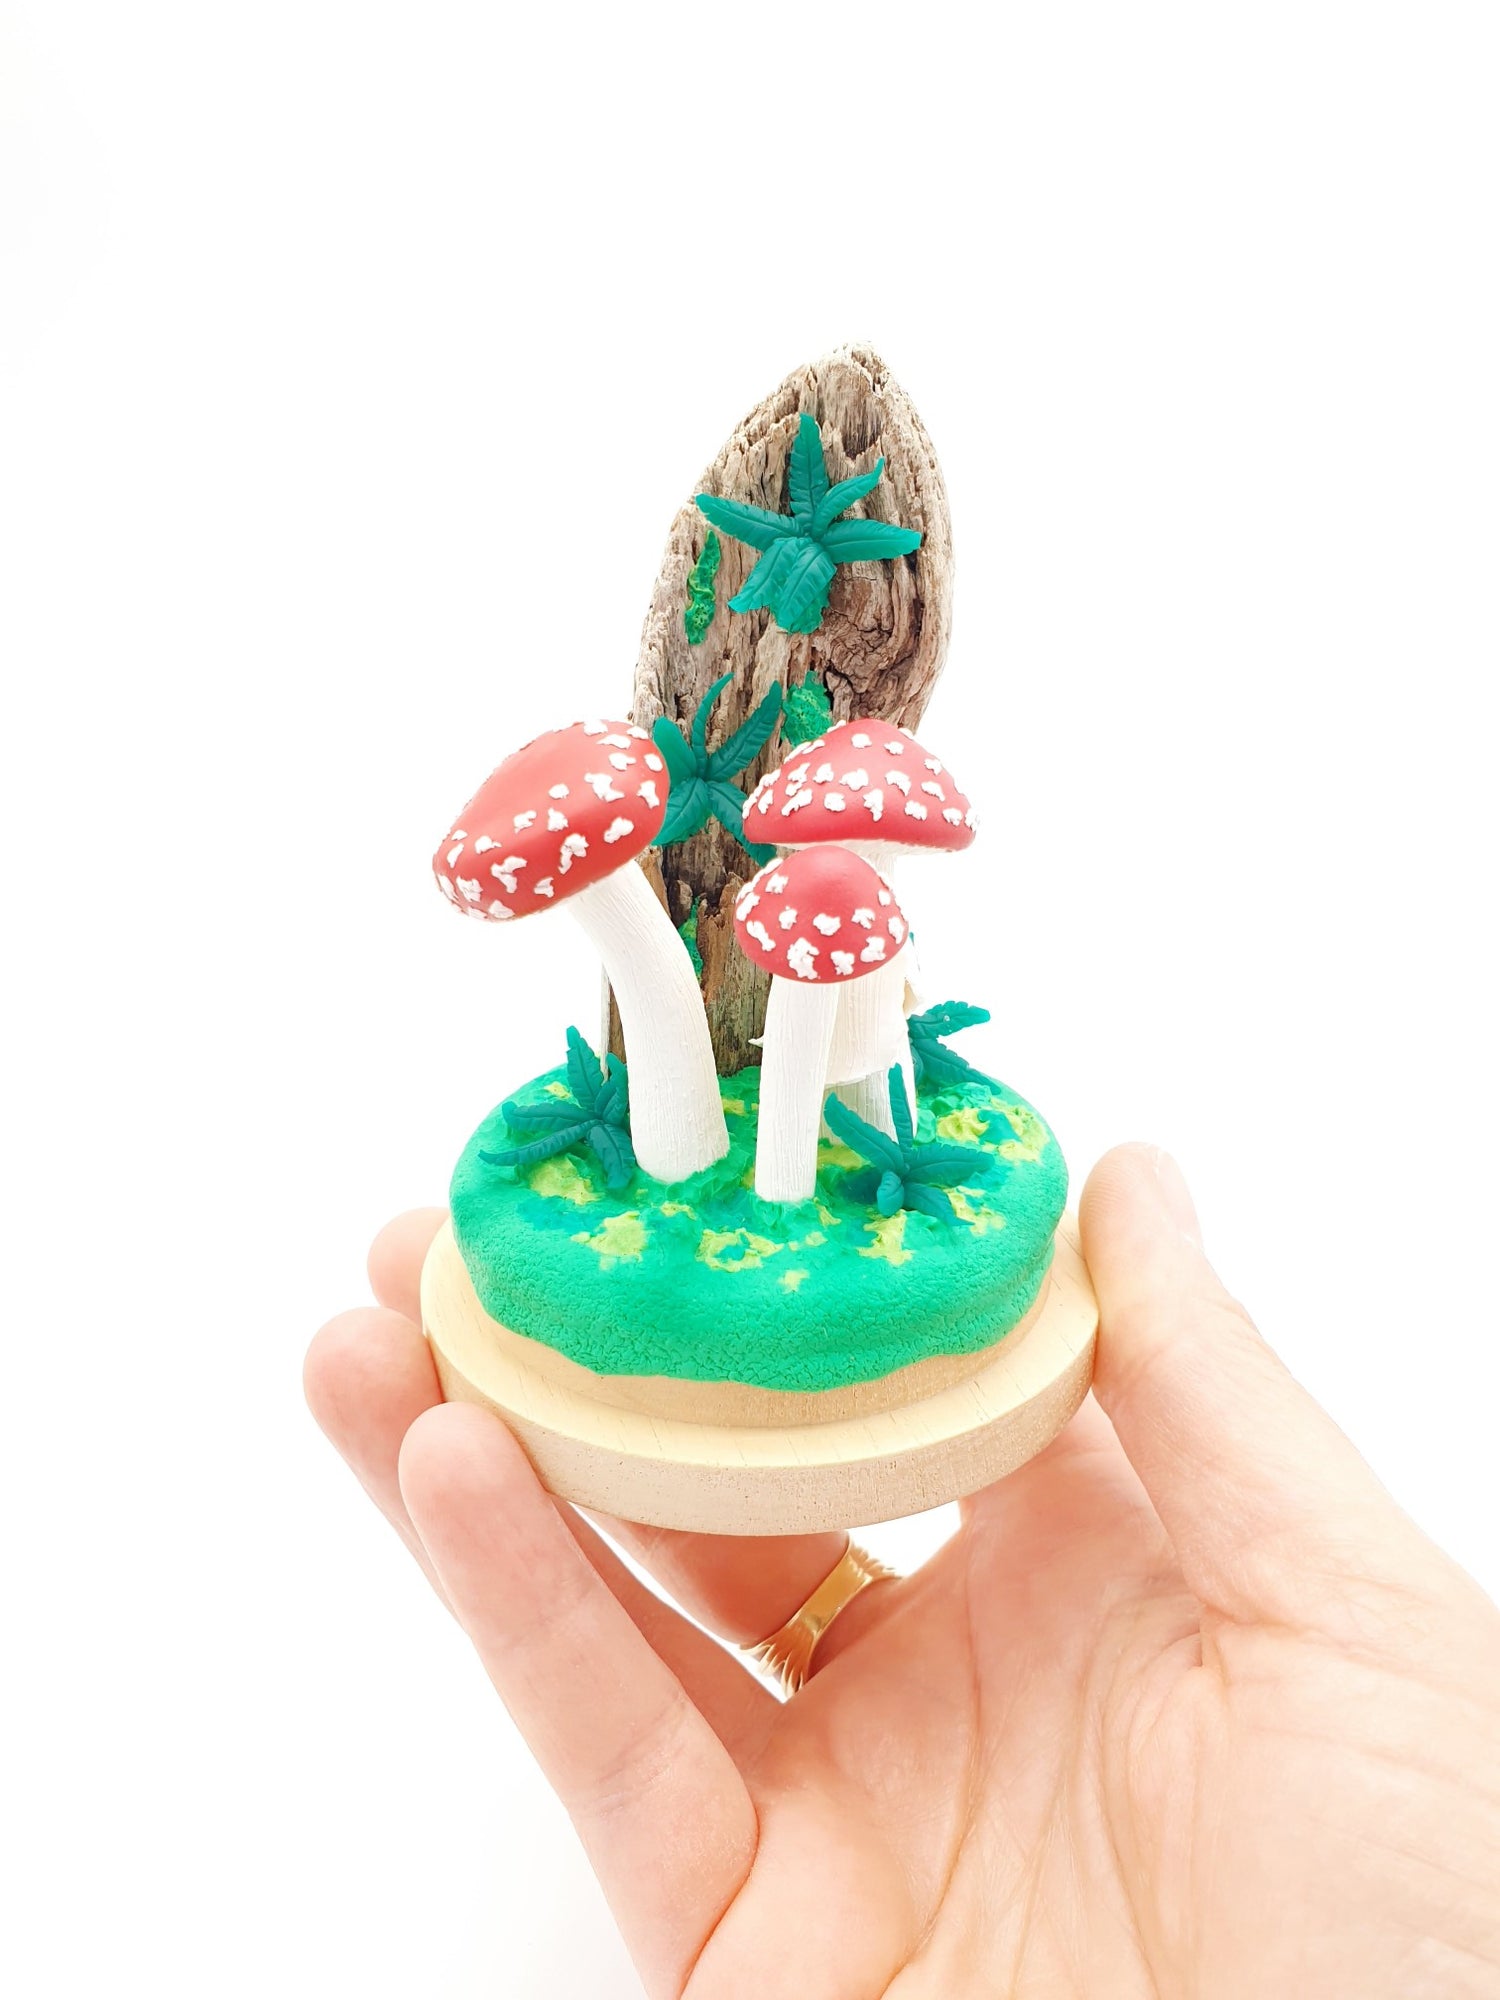 Mushroom forest sculptures